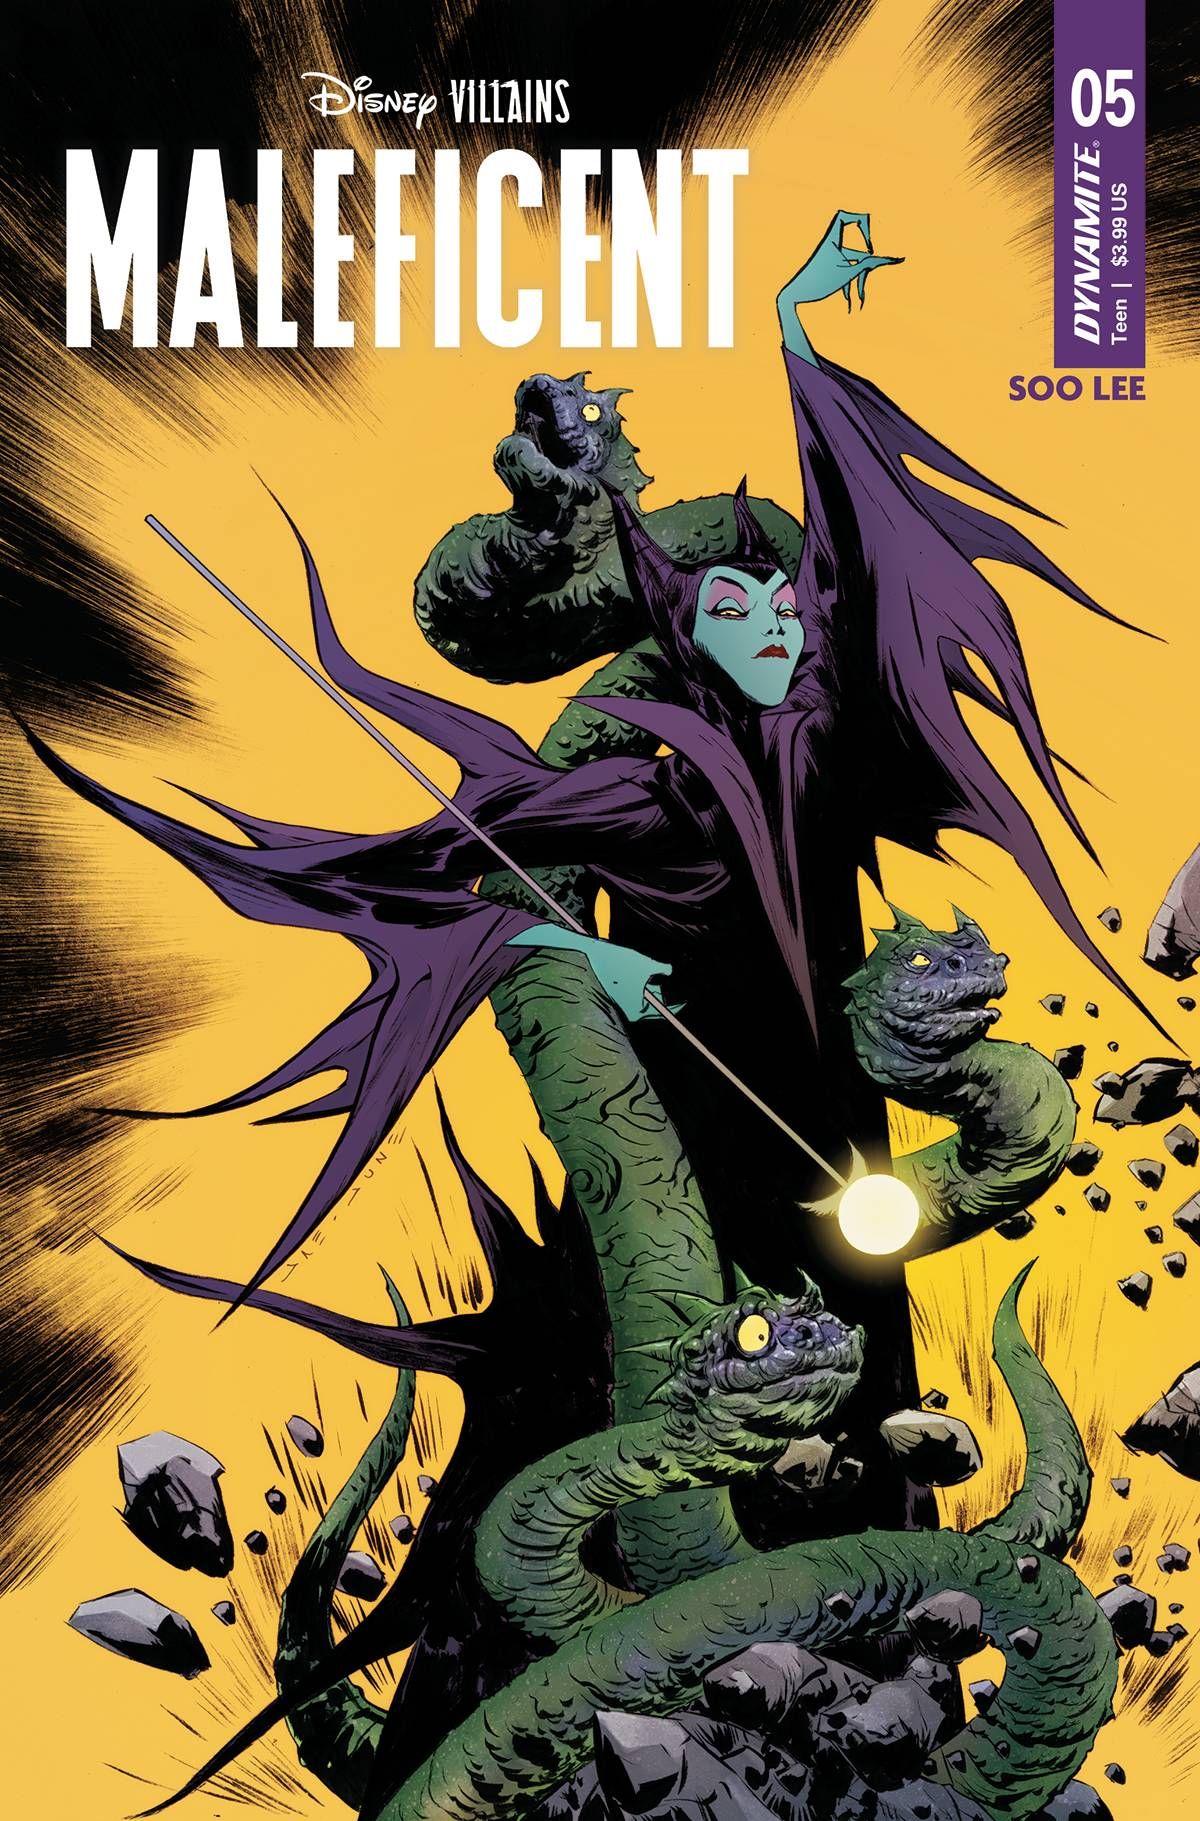 Disney Villains: Maleficent #5 Comic